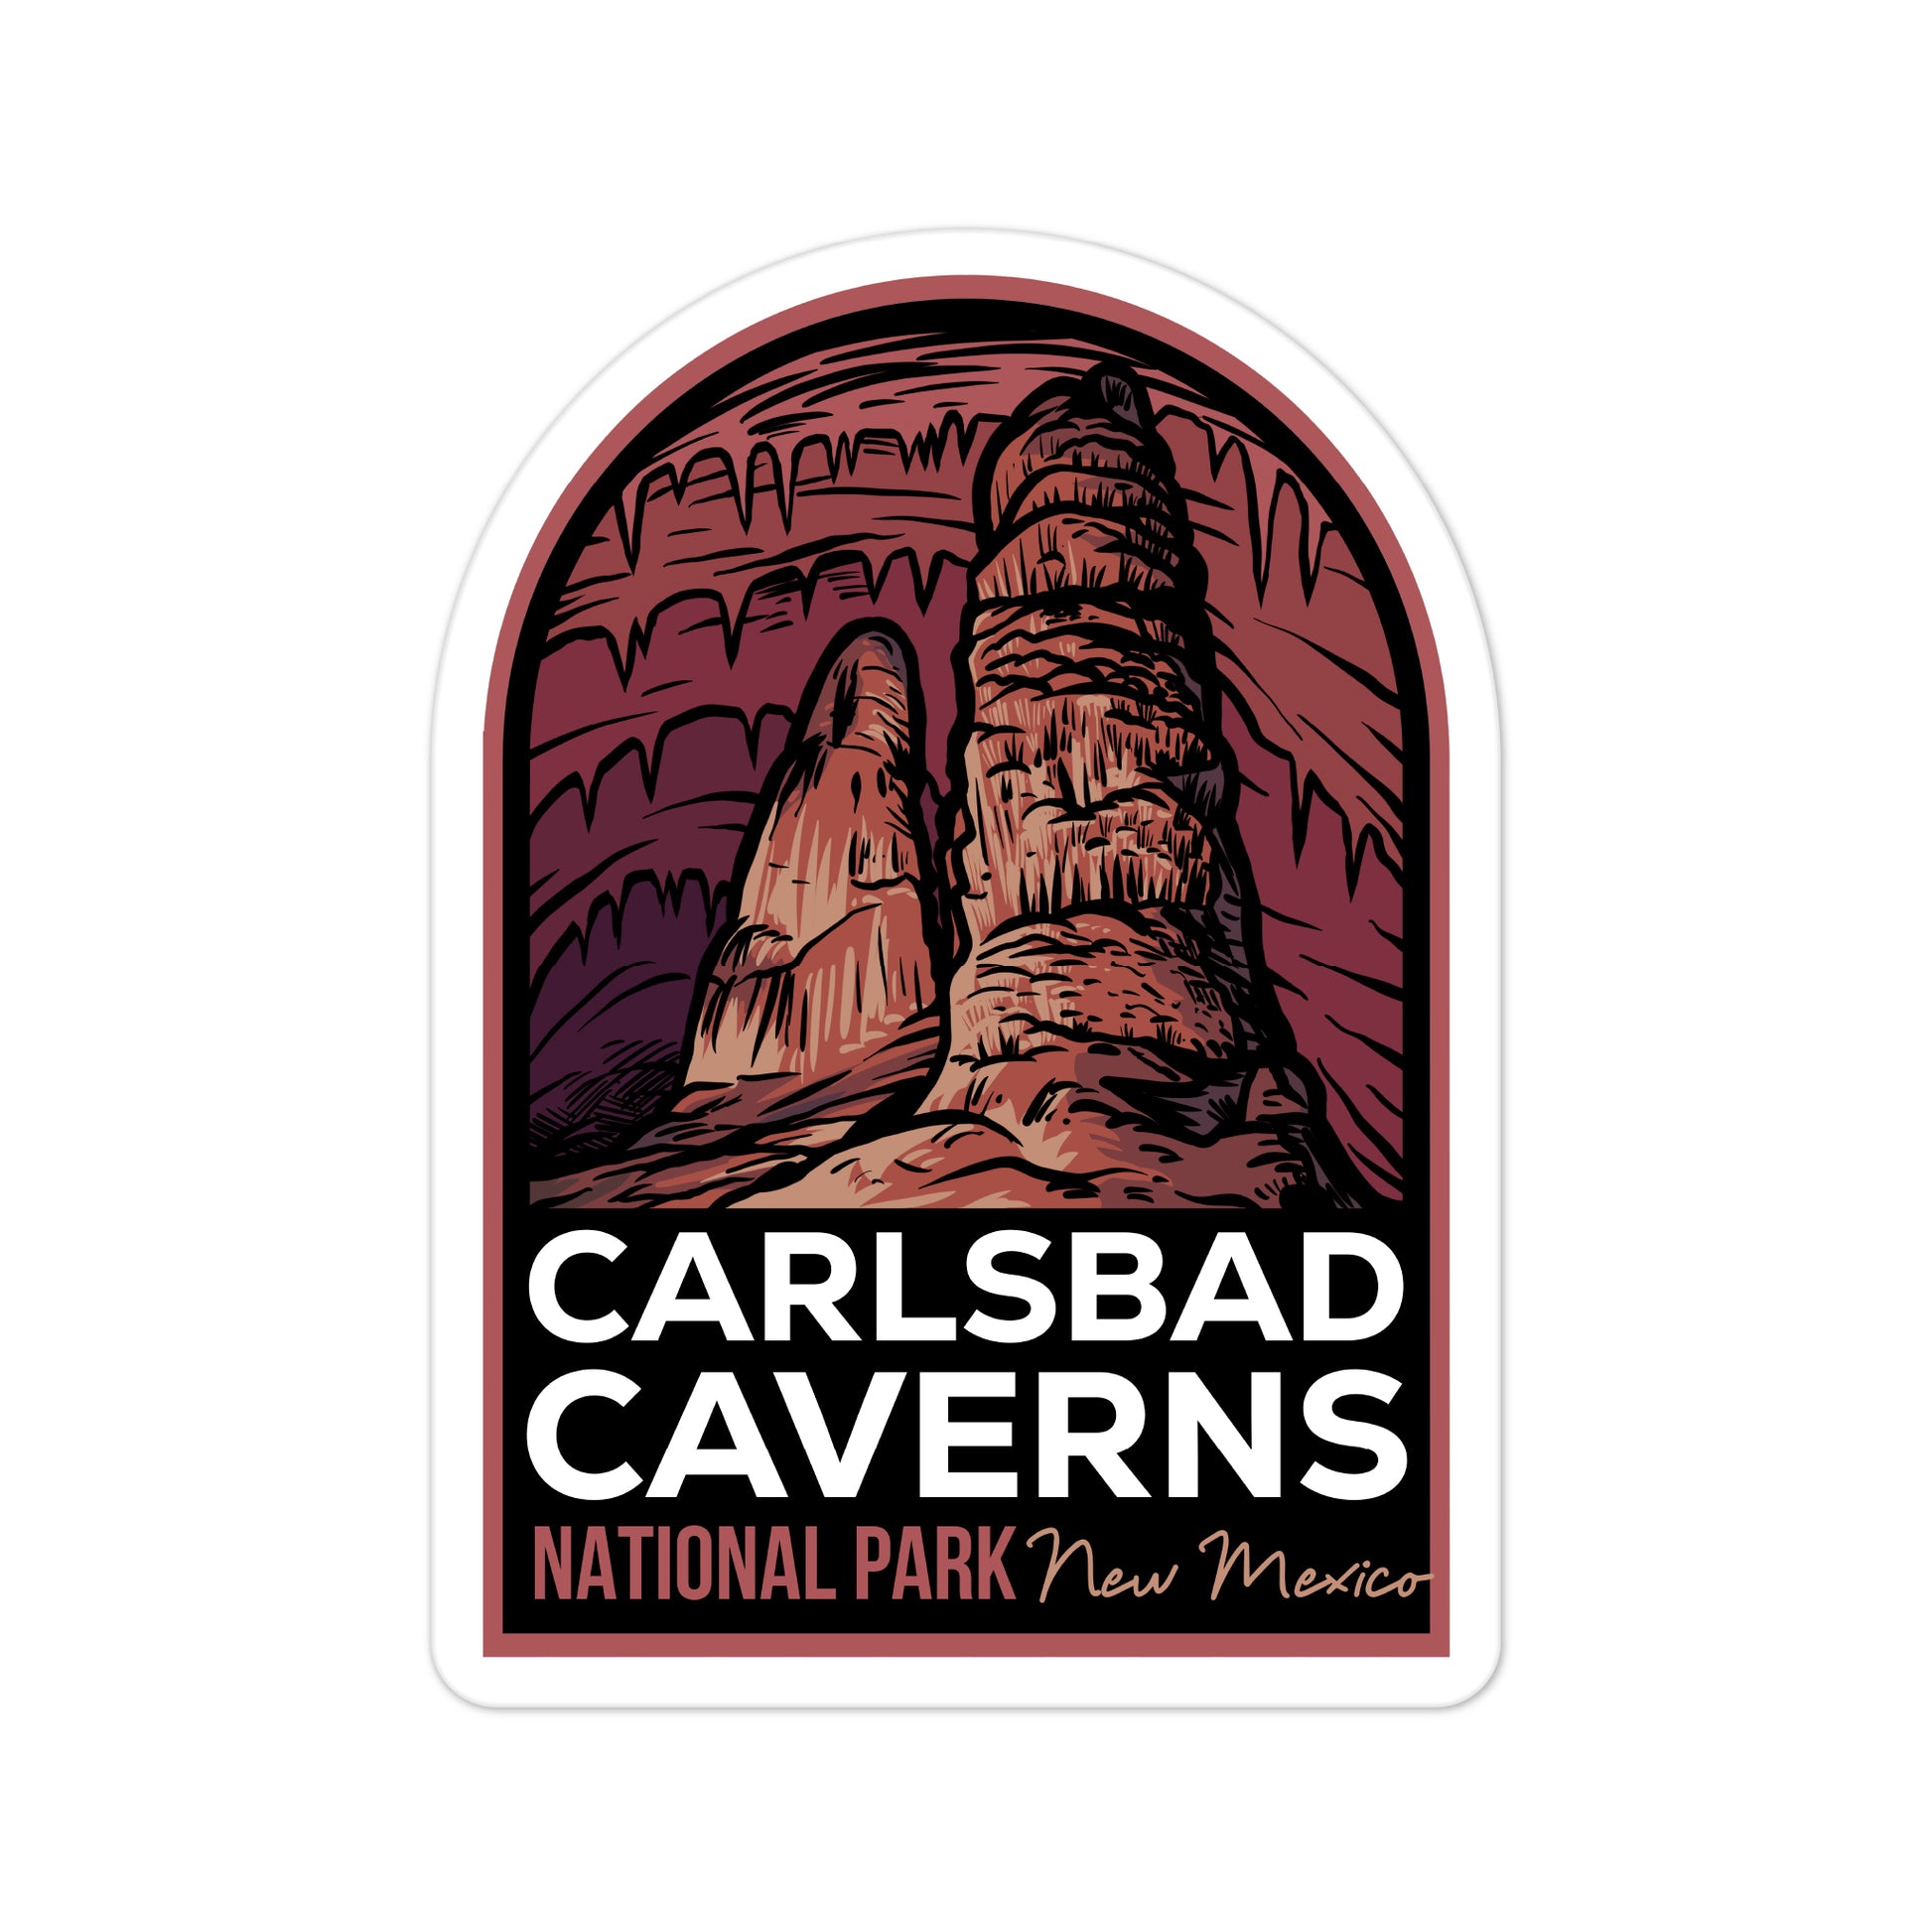 A sticker of Carlsbad Caverns National Park